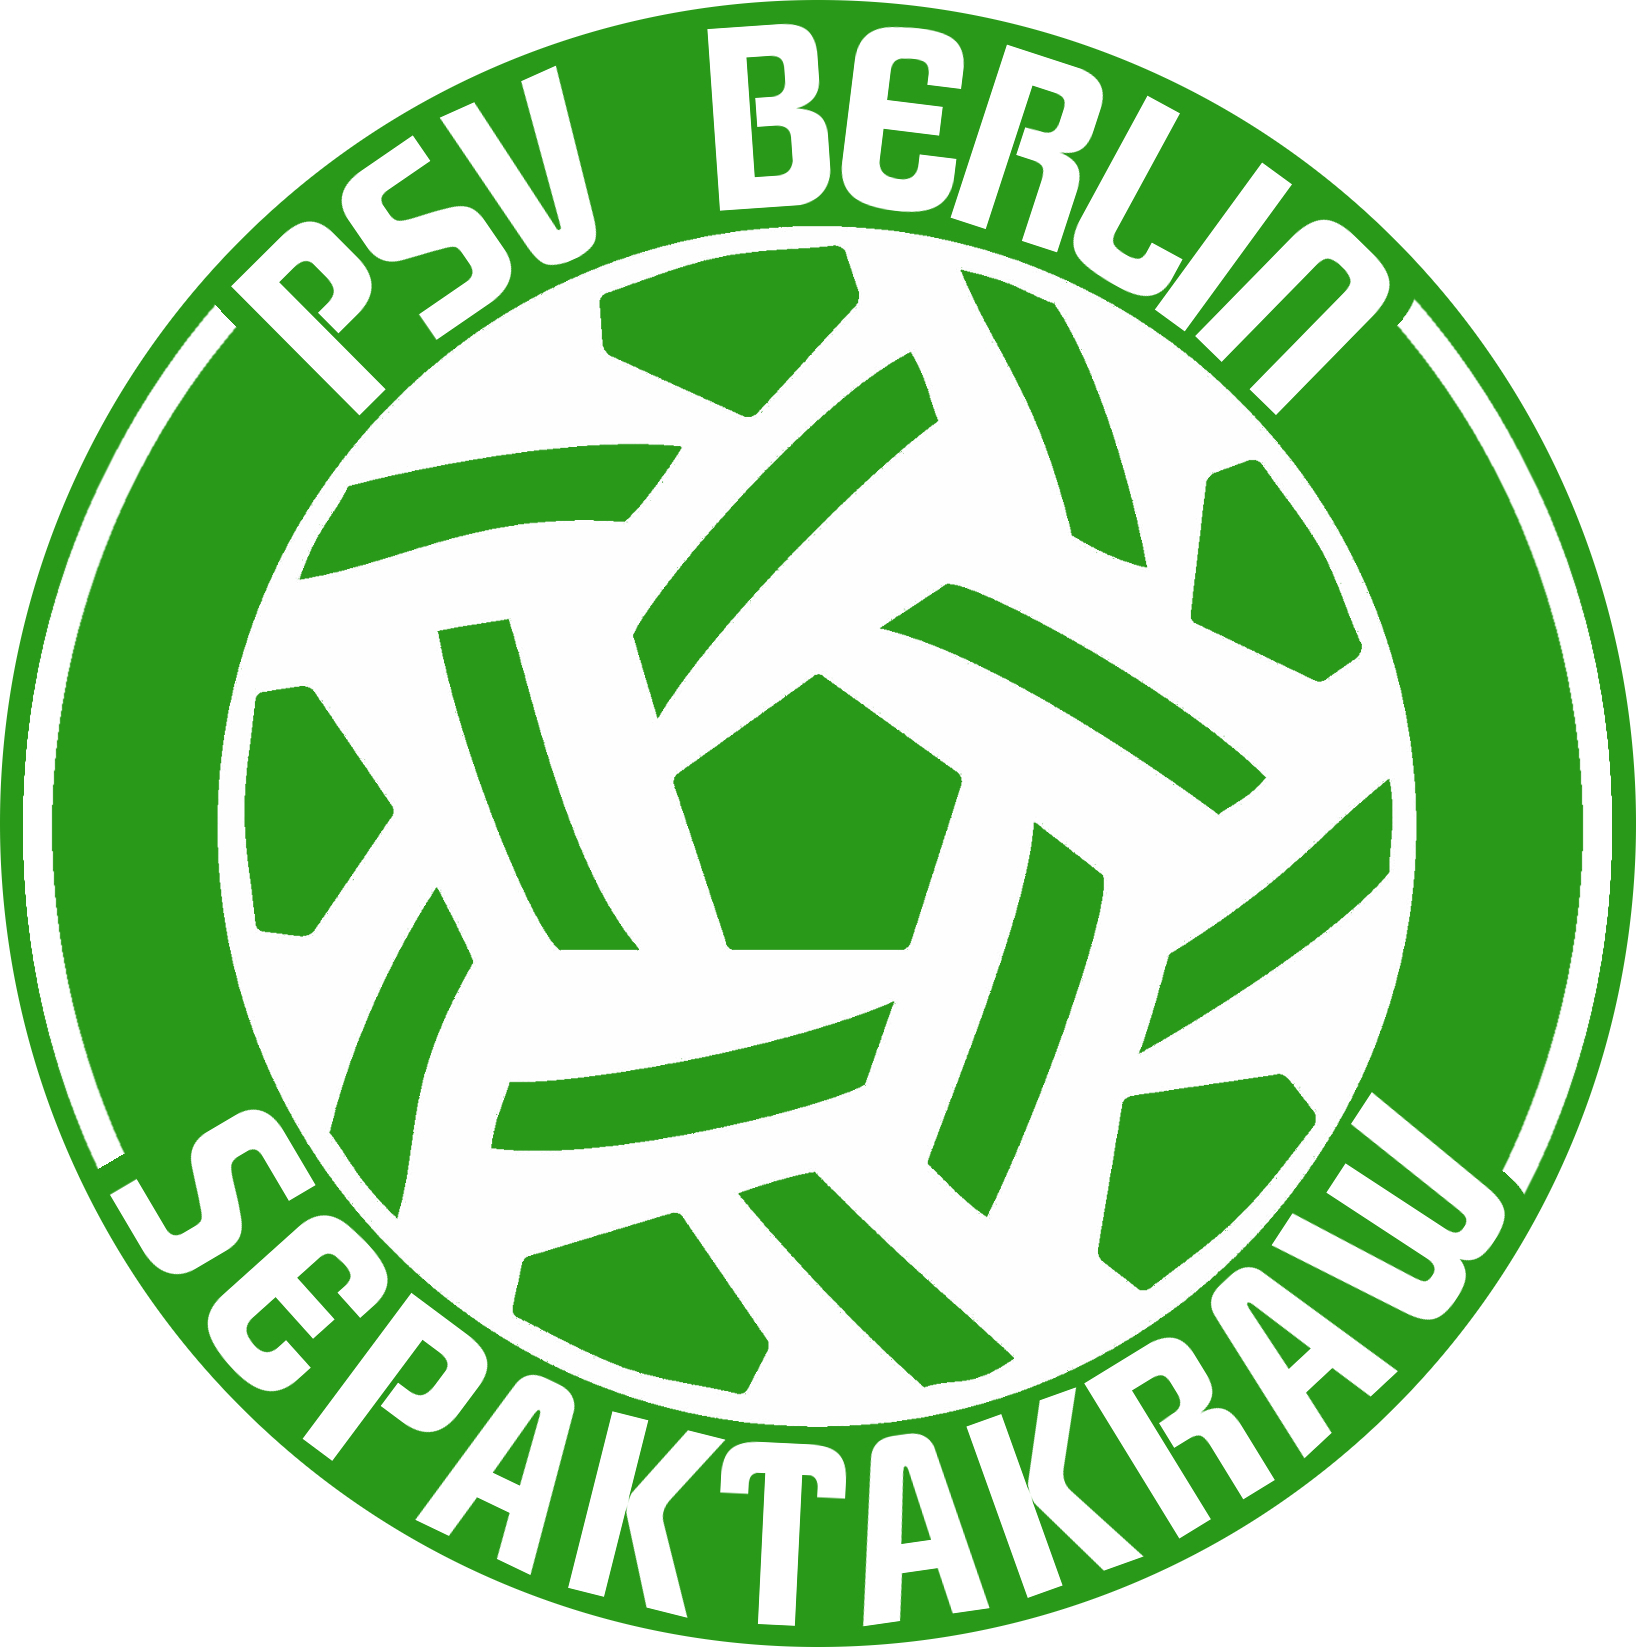 PSV Takraw Berlin